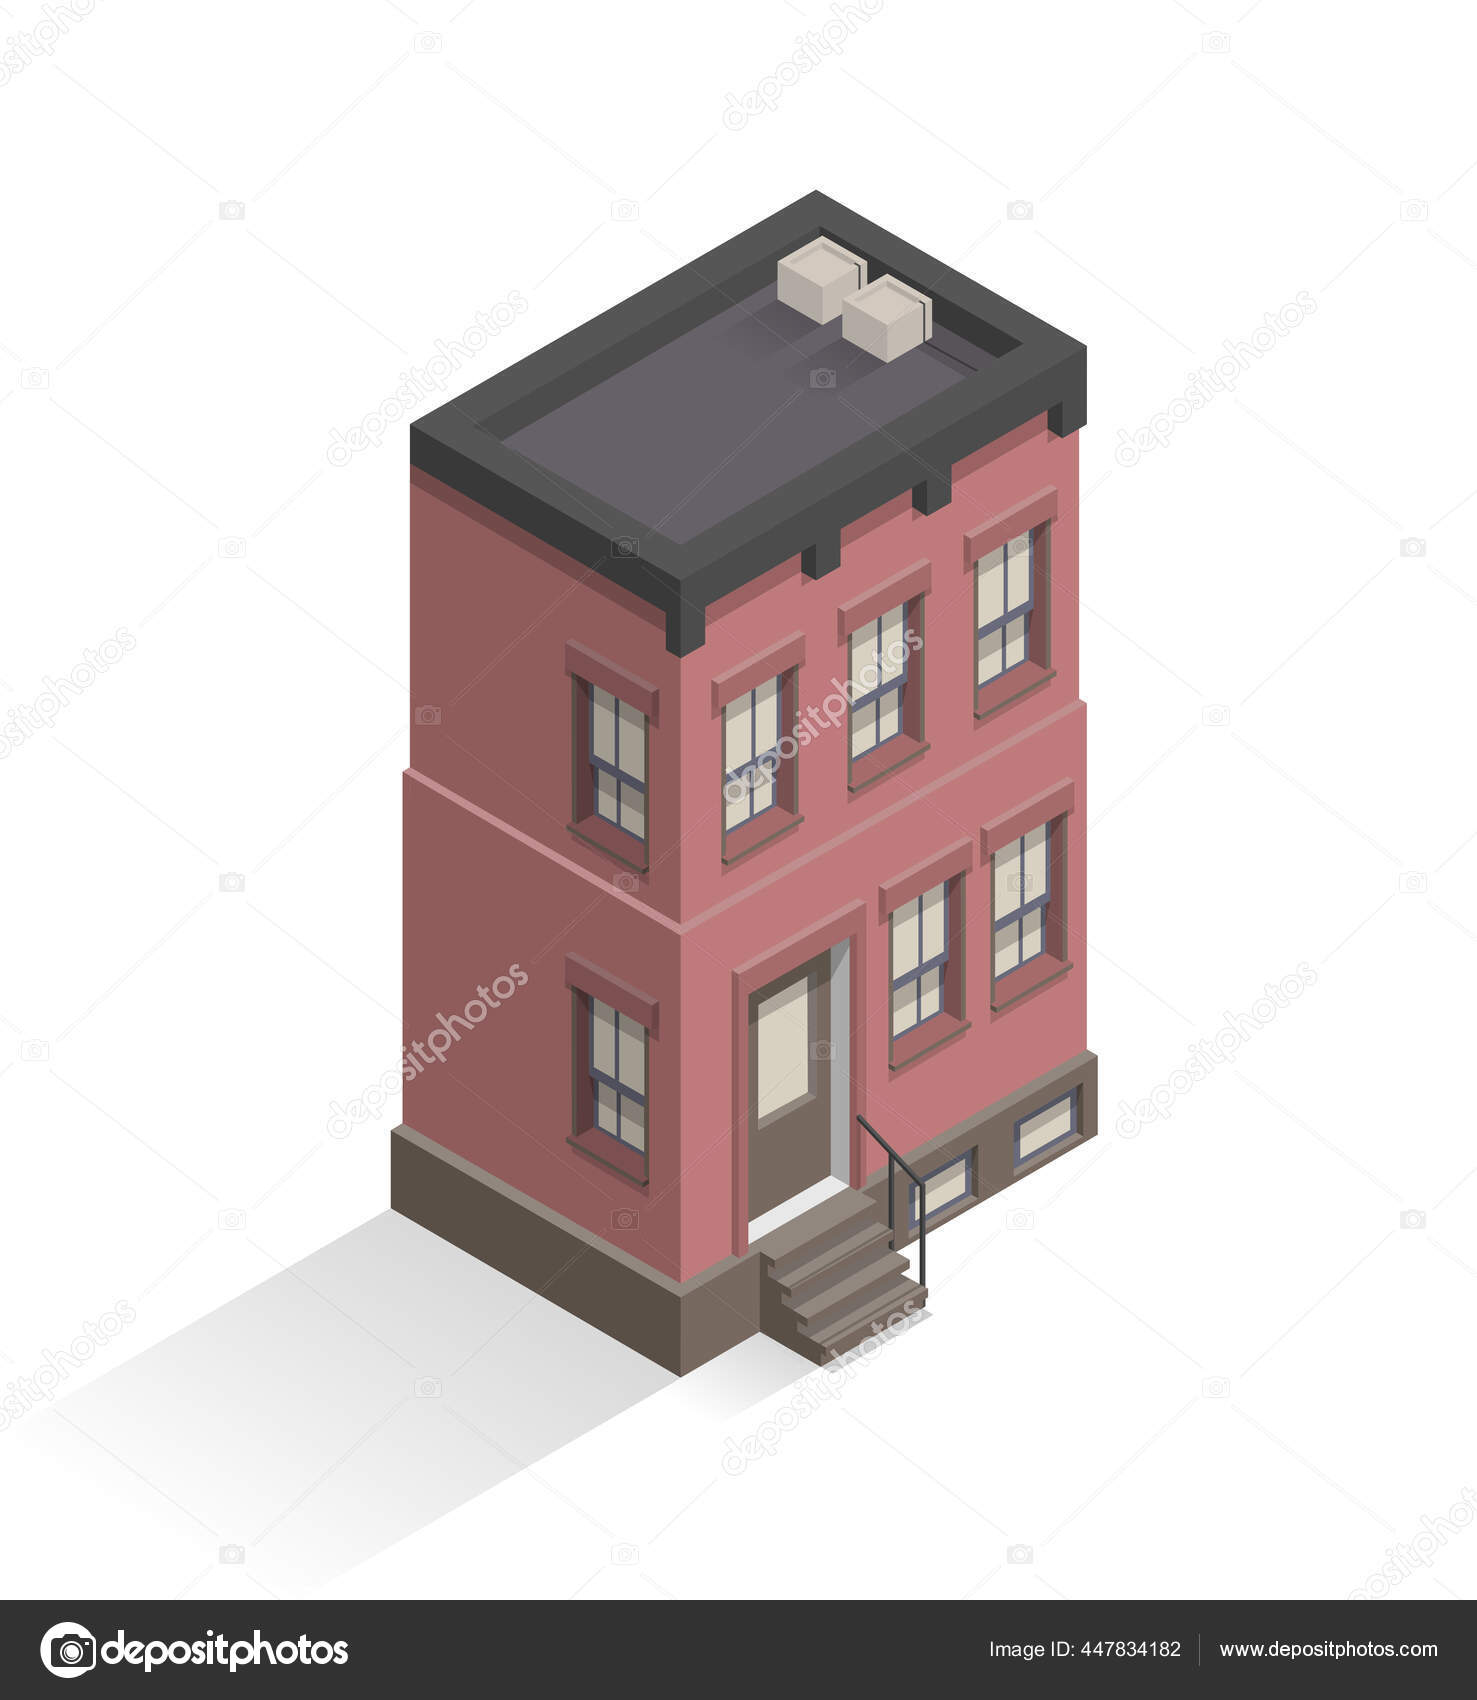 2-Storey Building Blocks House 